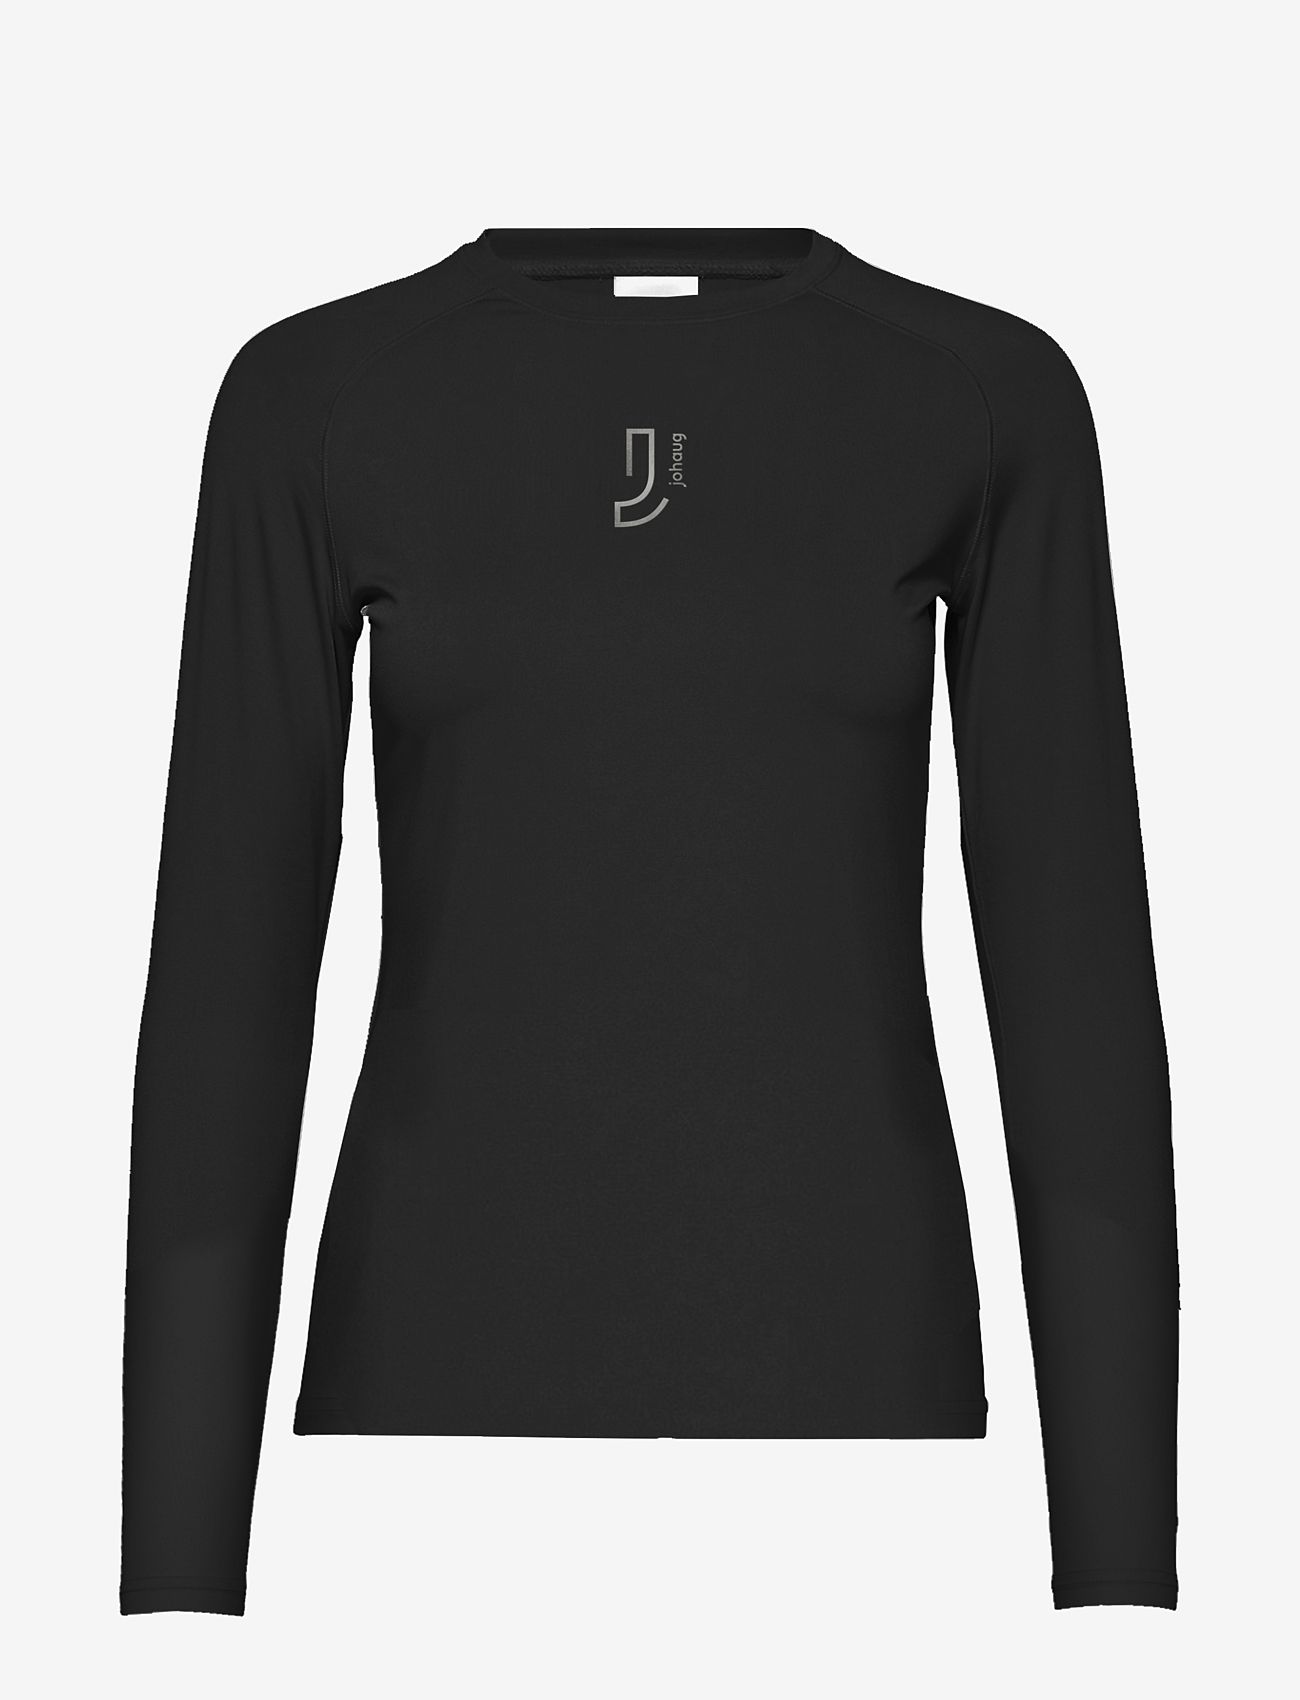 Johaug - Elemental Long Sleeve 2.0 - langarmshirts - black - 0